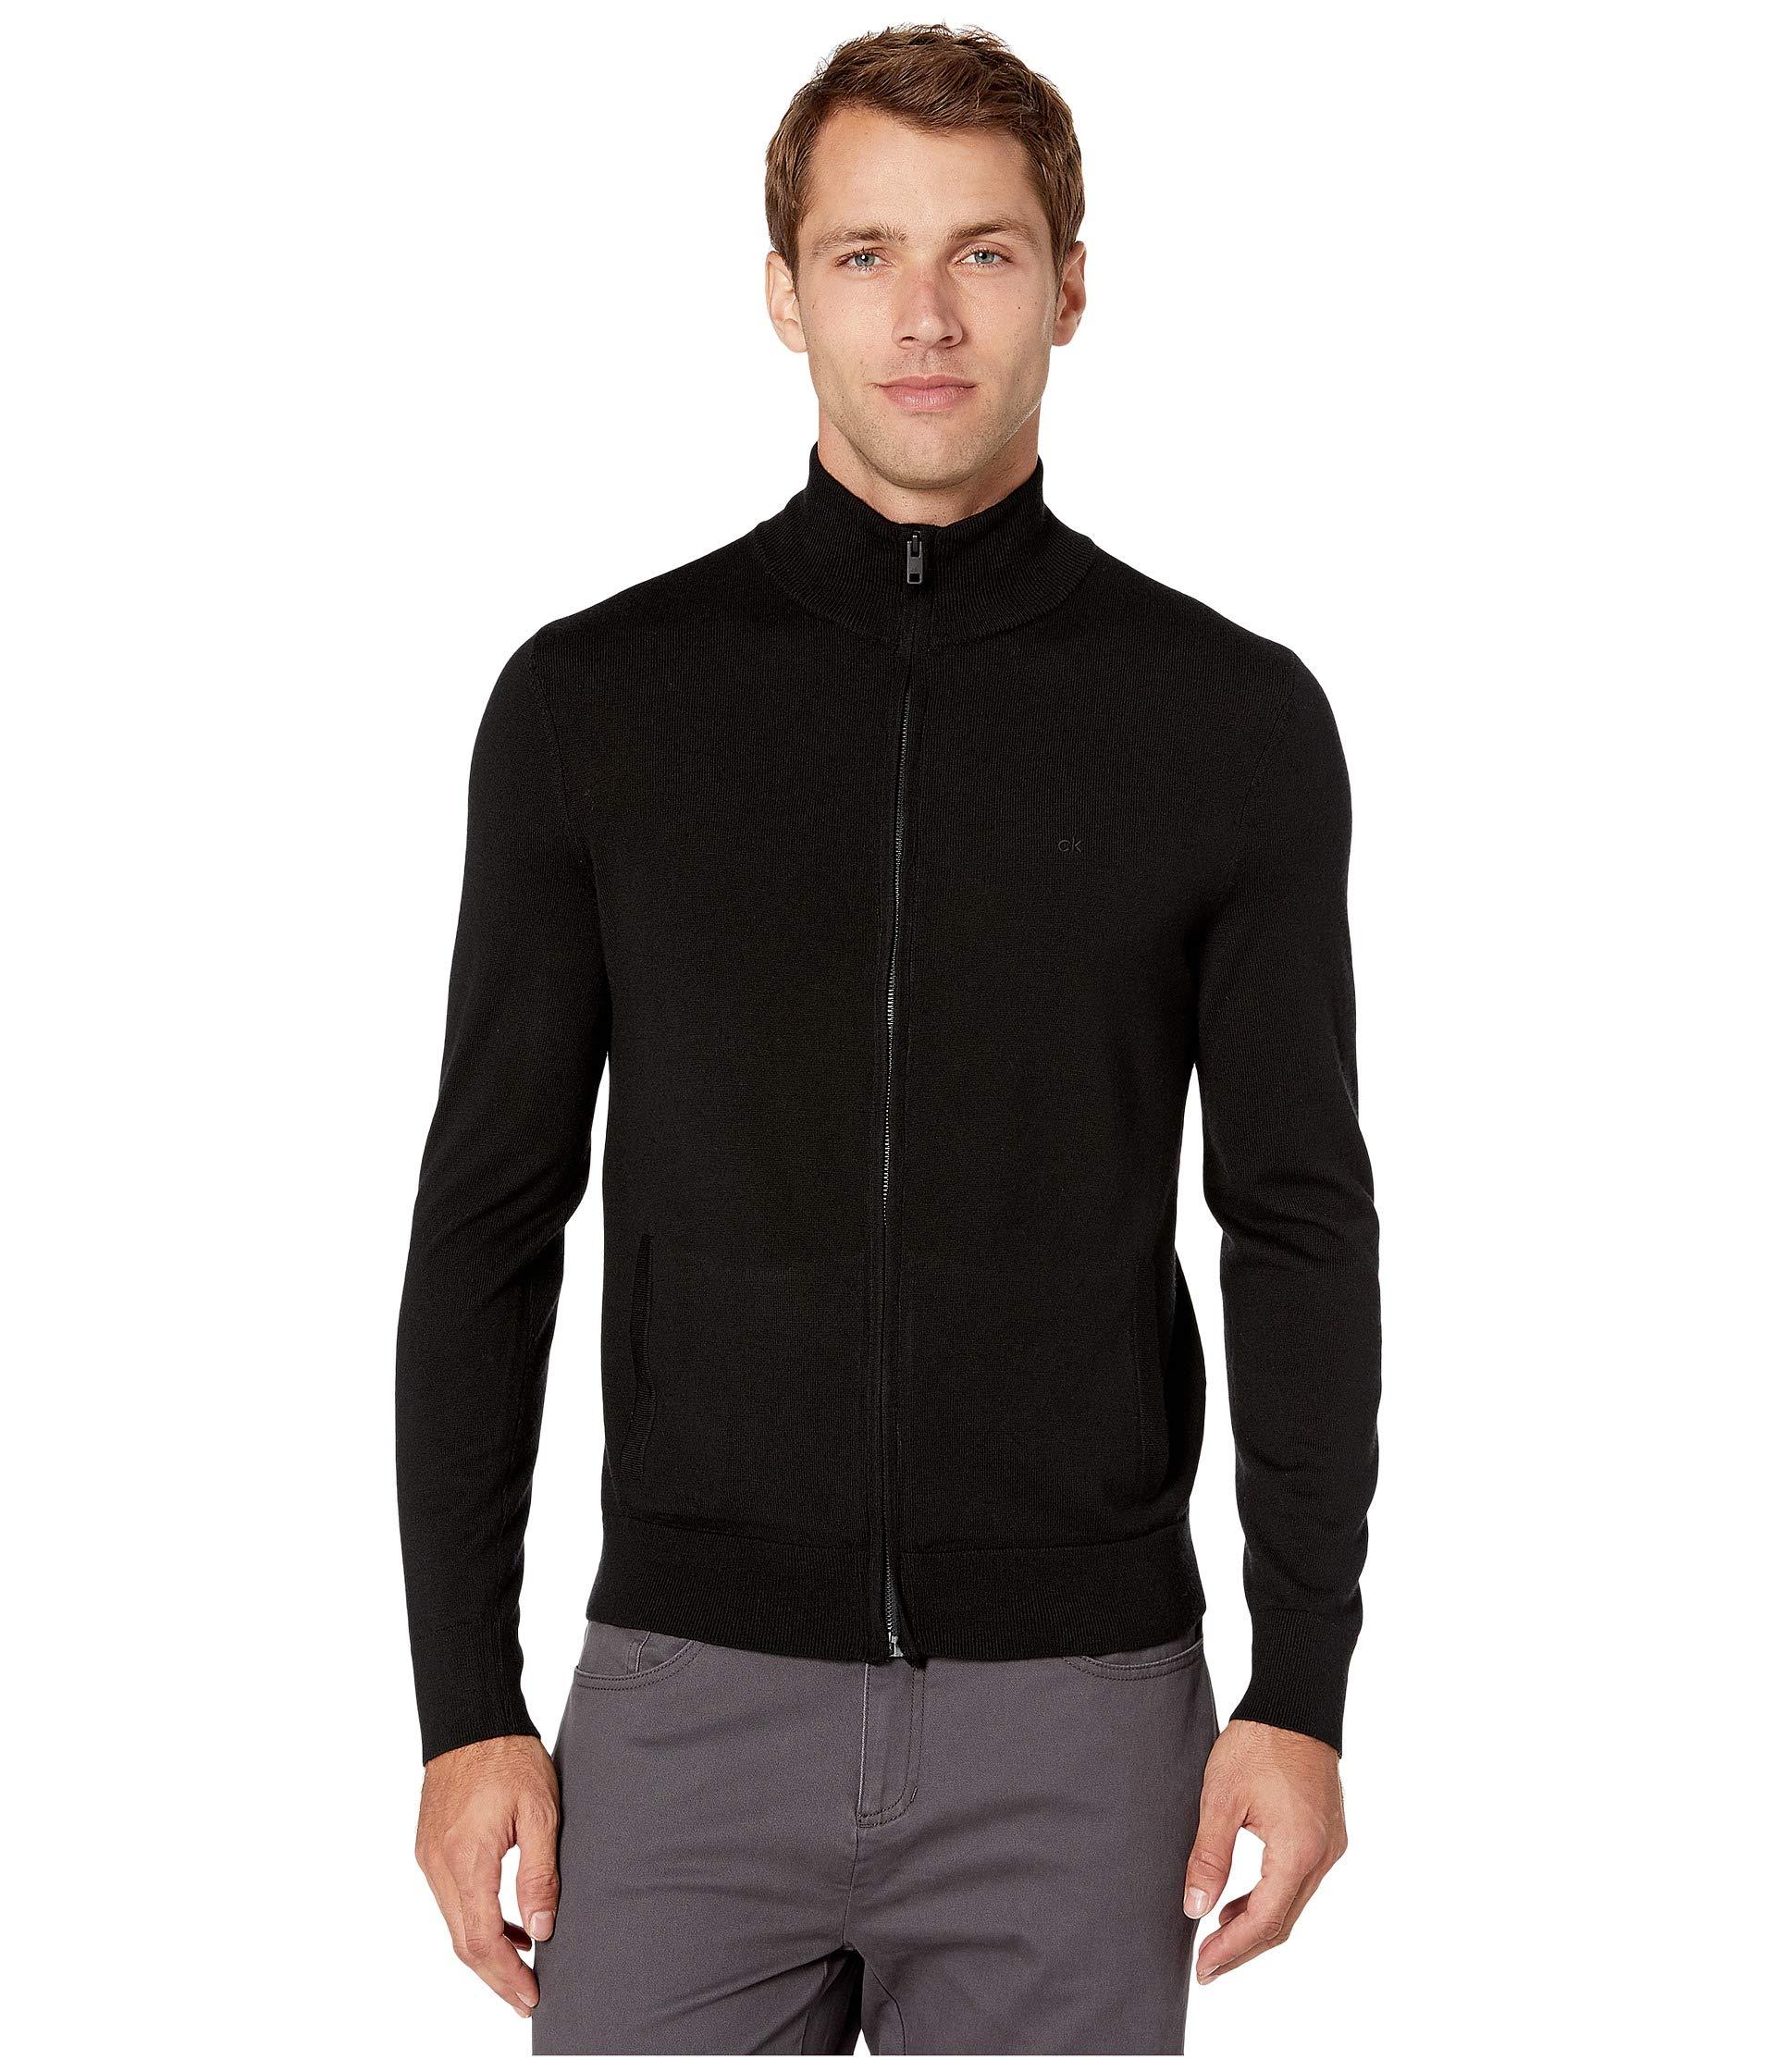 Calvin Klein Wool Merino Full Zip Sweater in Black for Men - Lyst